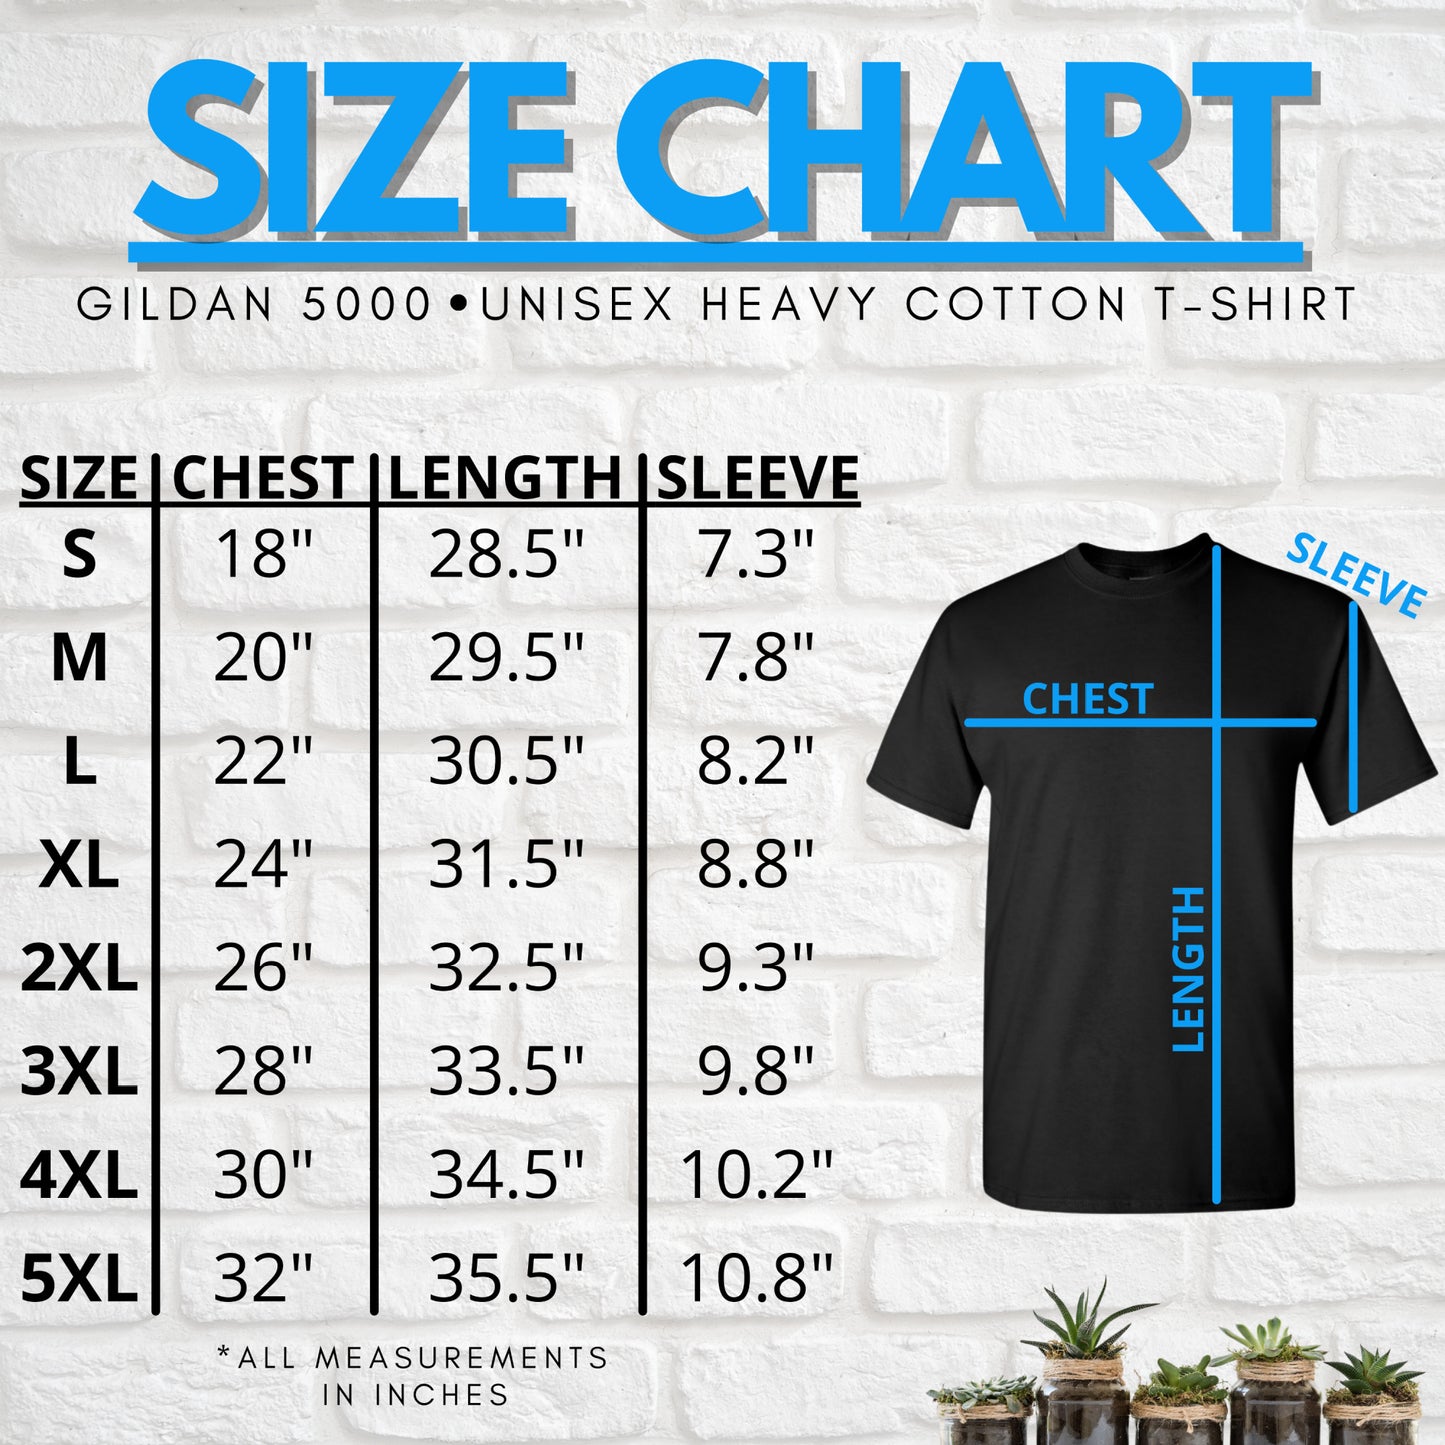 Size chart for the Unisex Gildan 5000 shirt